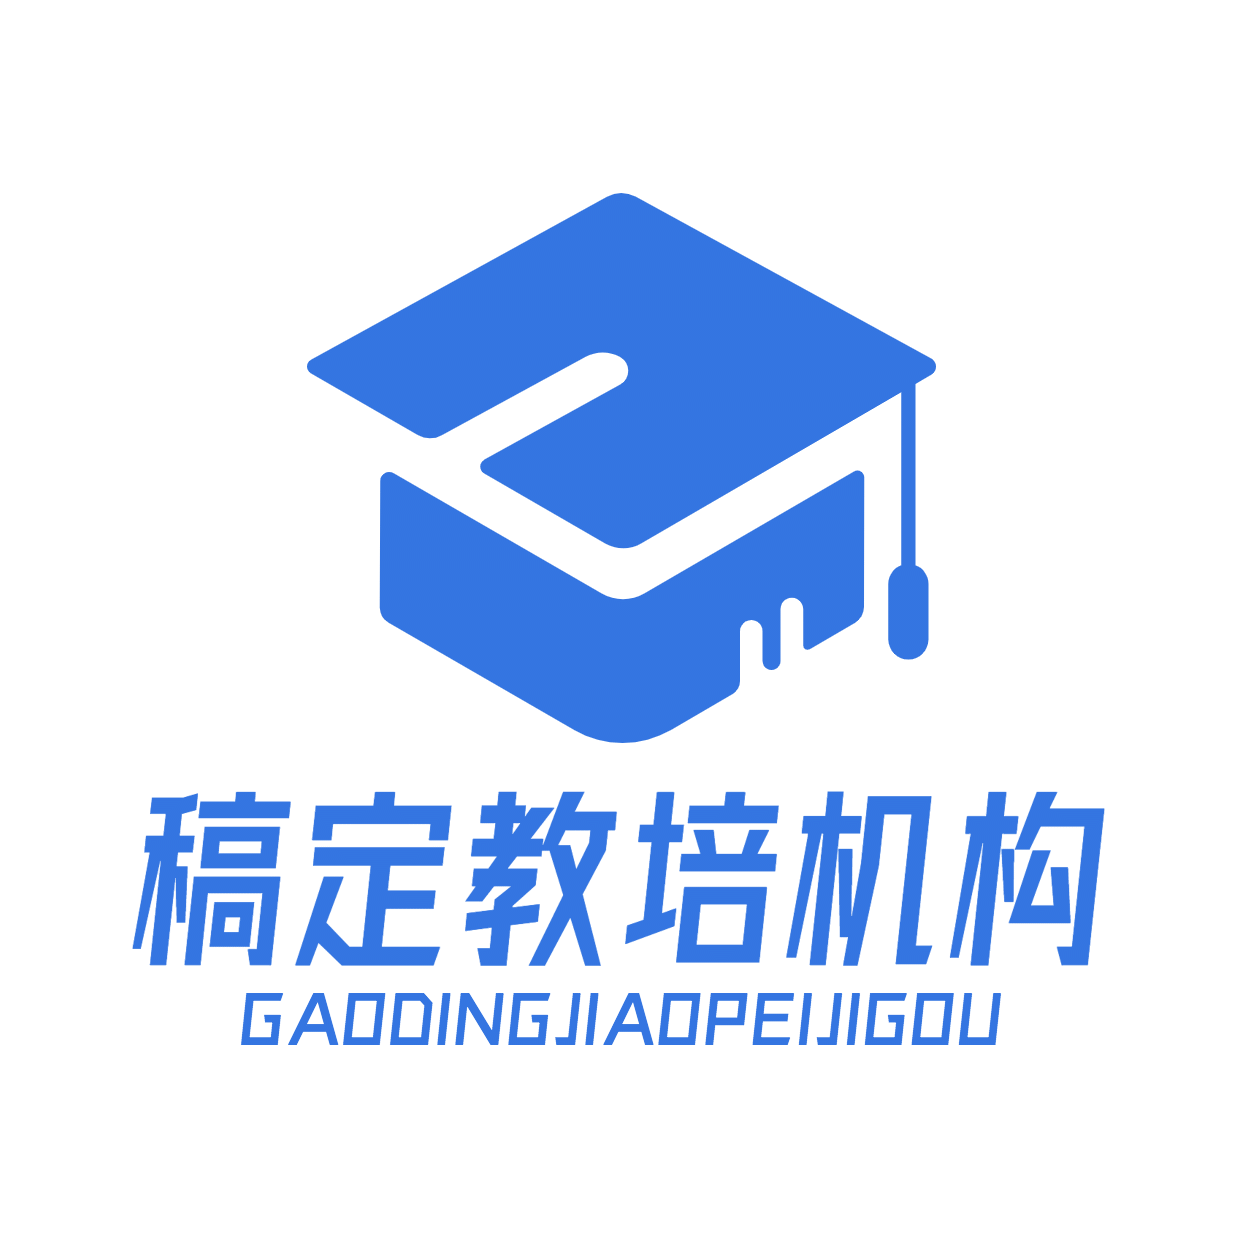 教育培训头像校徽logo